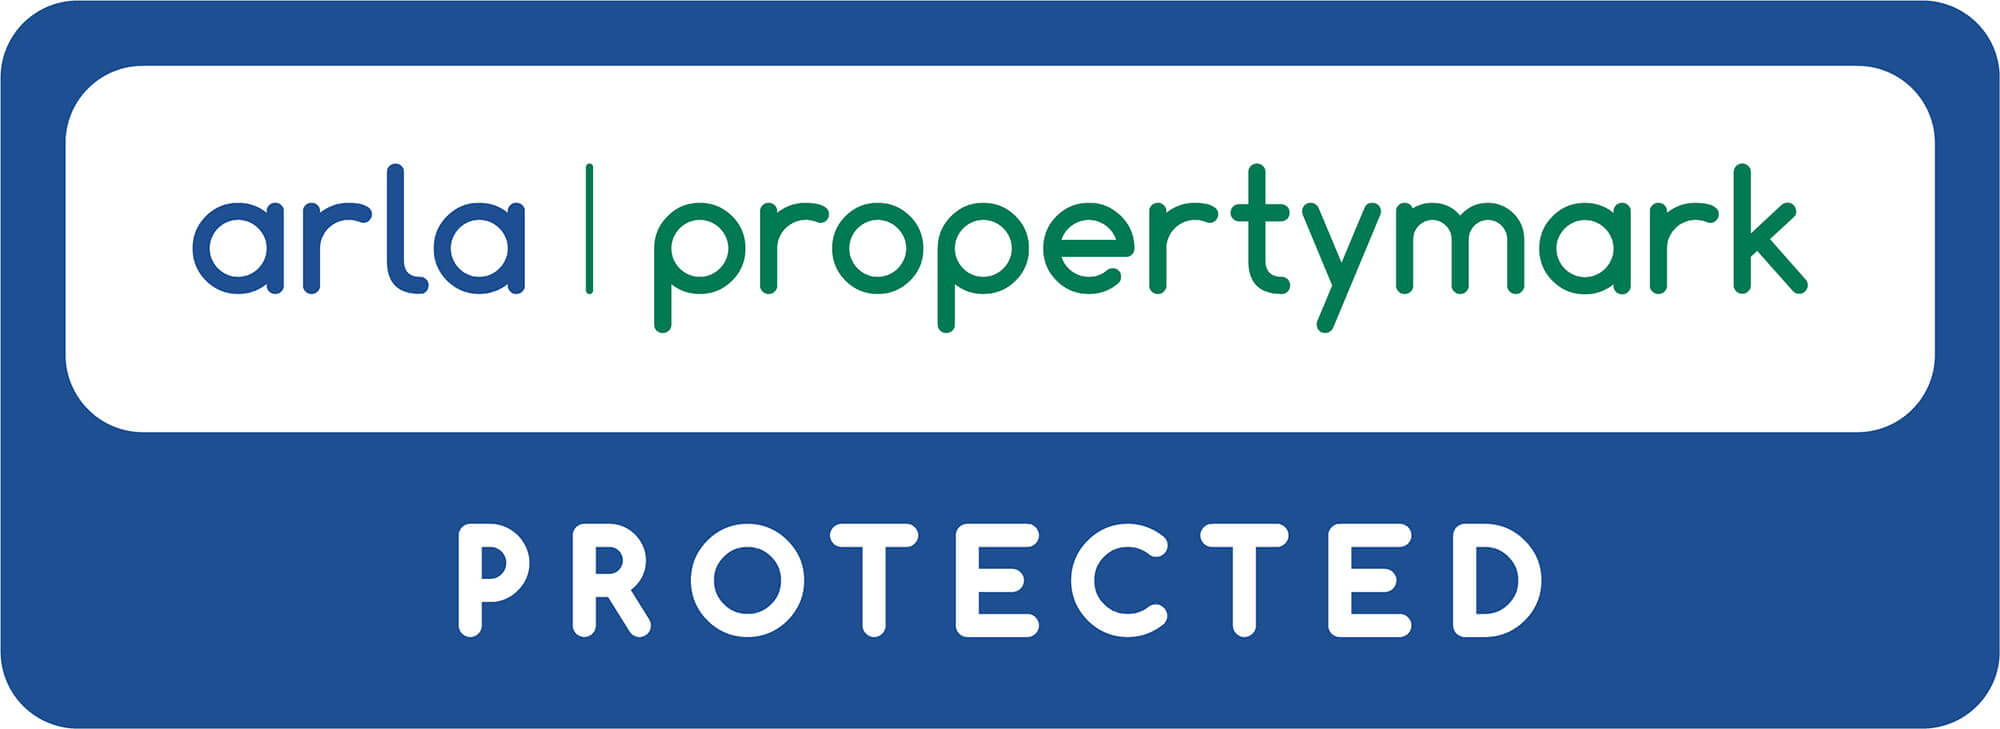 ARLA Propertymark Protected.jpg